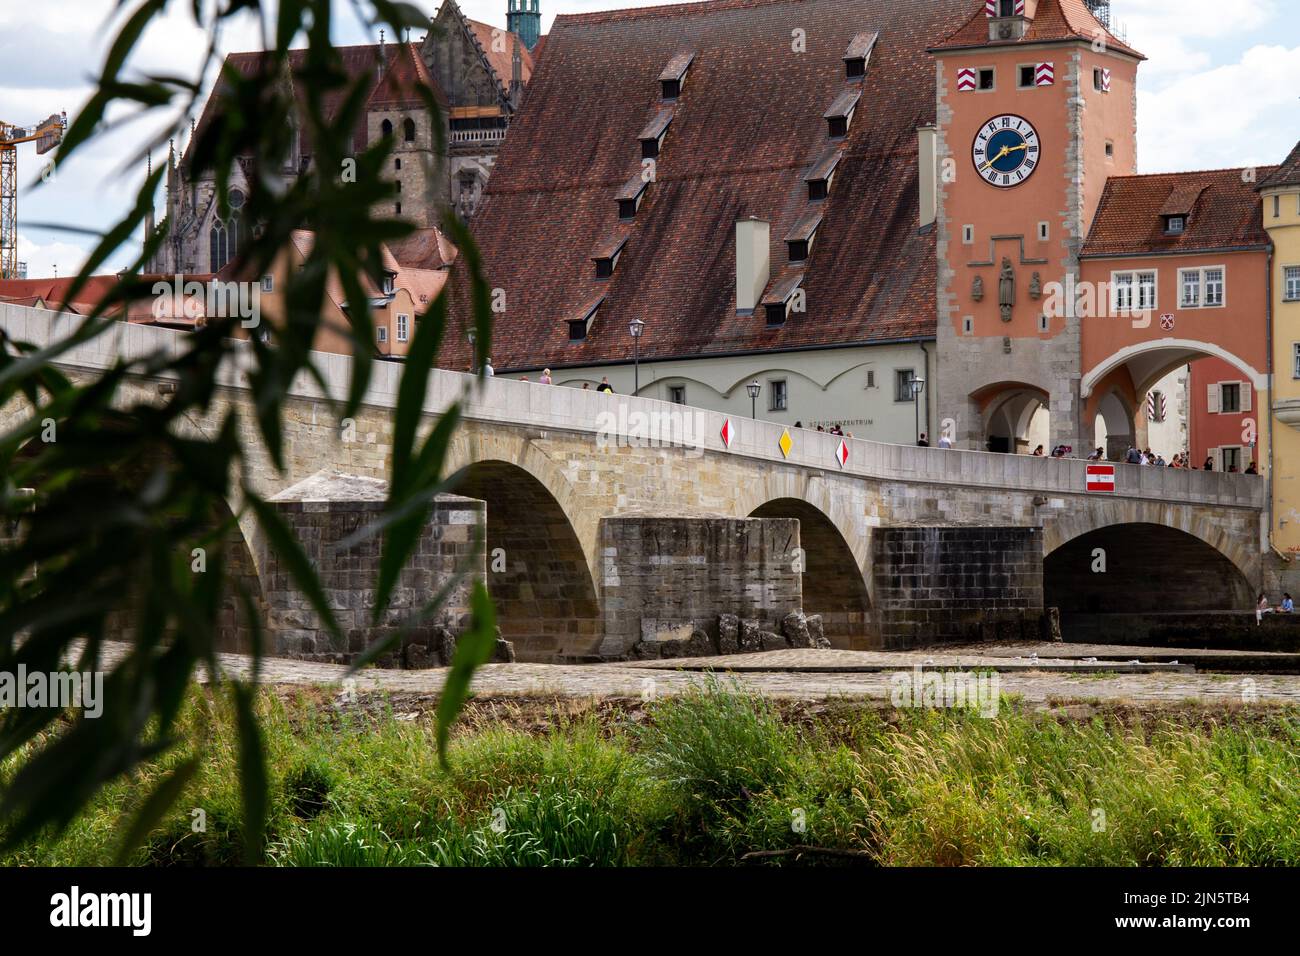 Steinerne Brücke / Stone Bridge Regensburg, Bayern / Bavaria Stock Photo